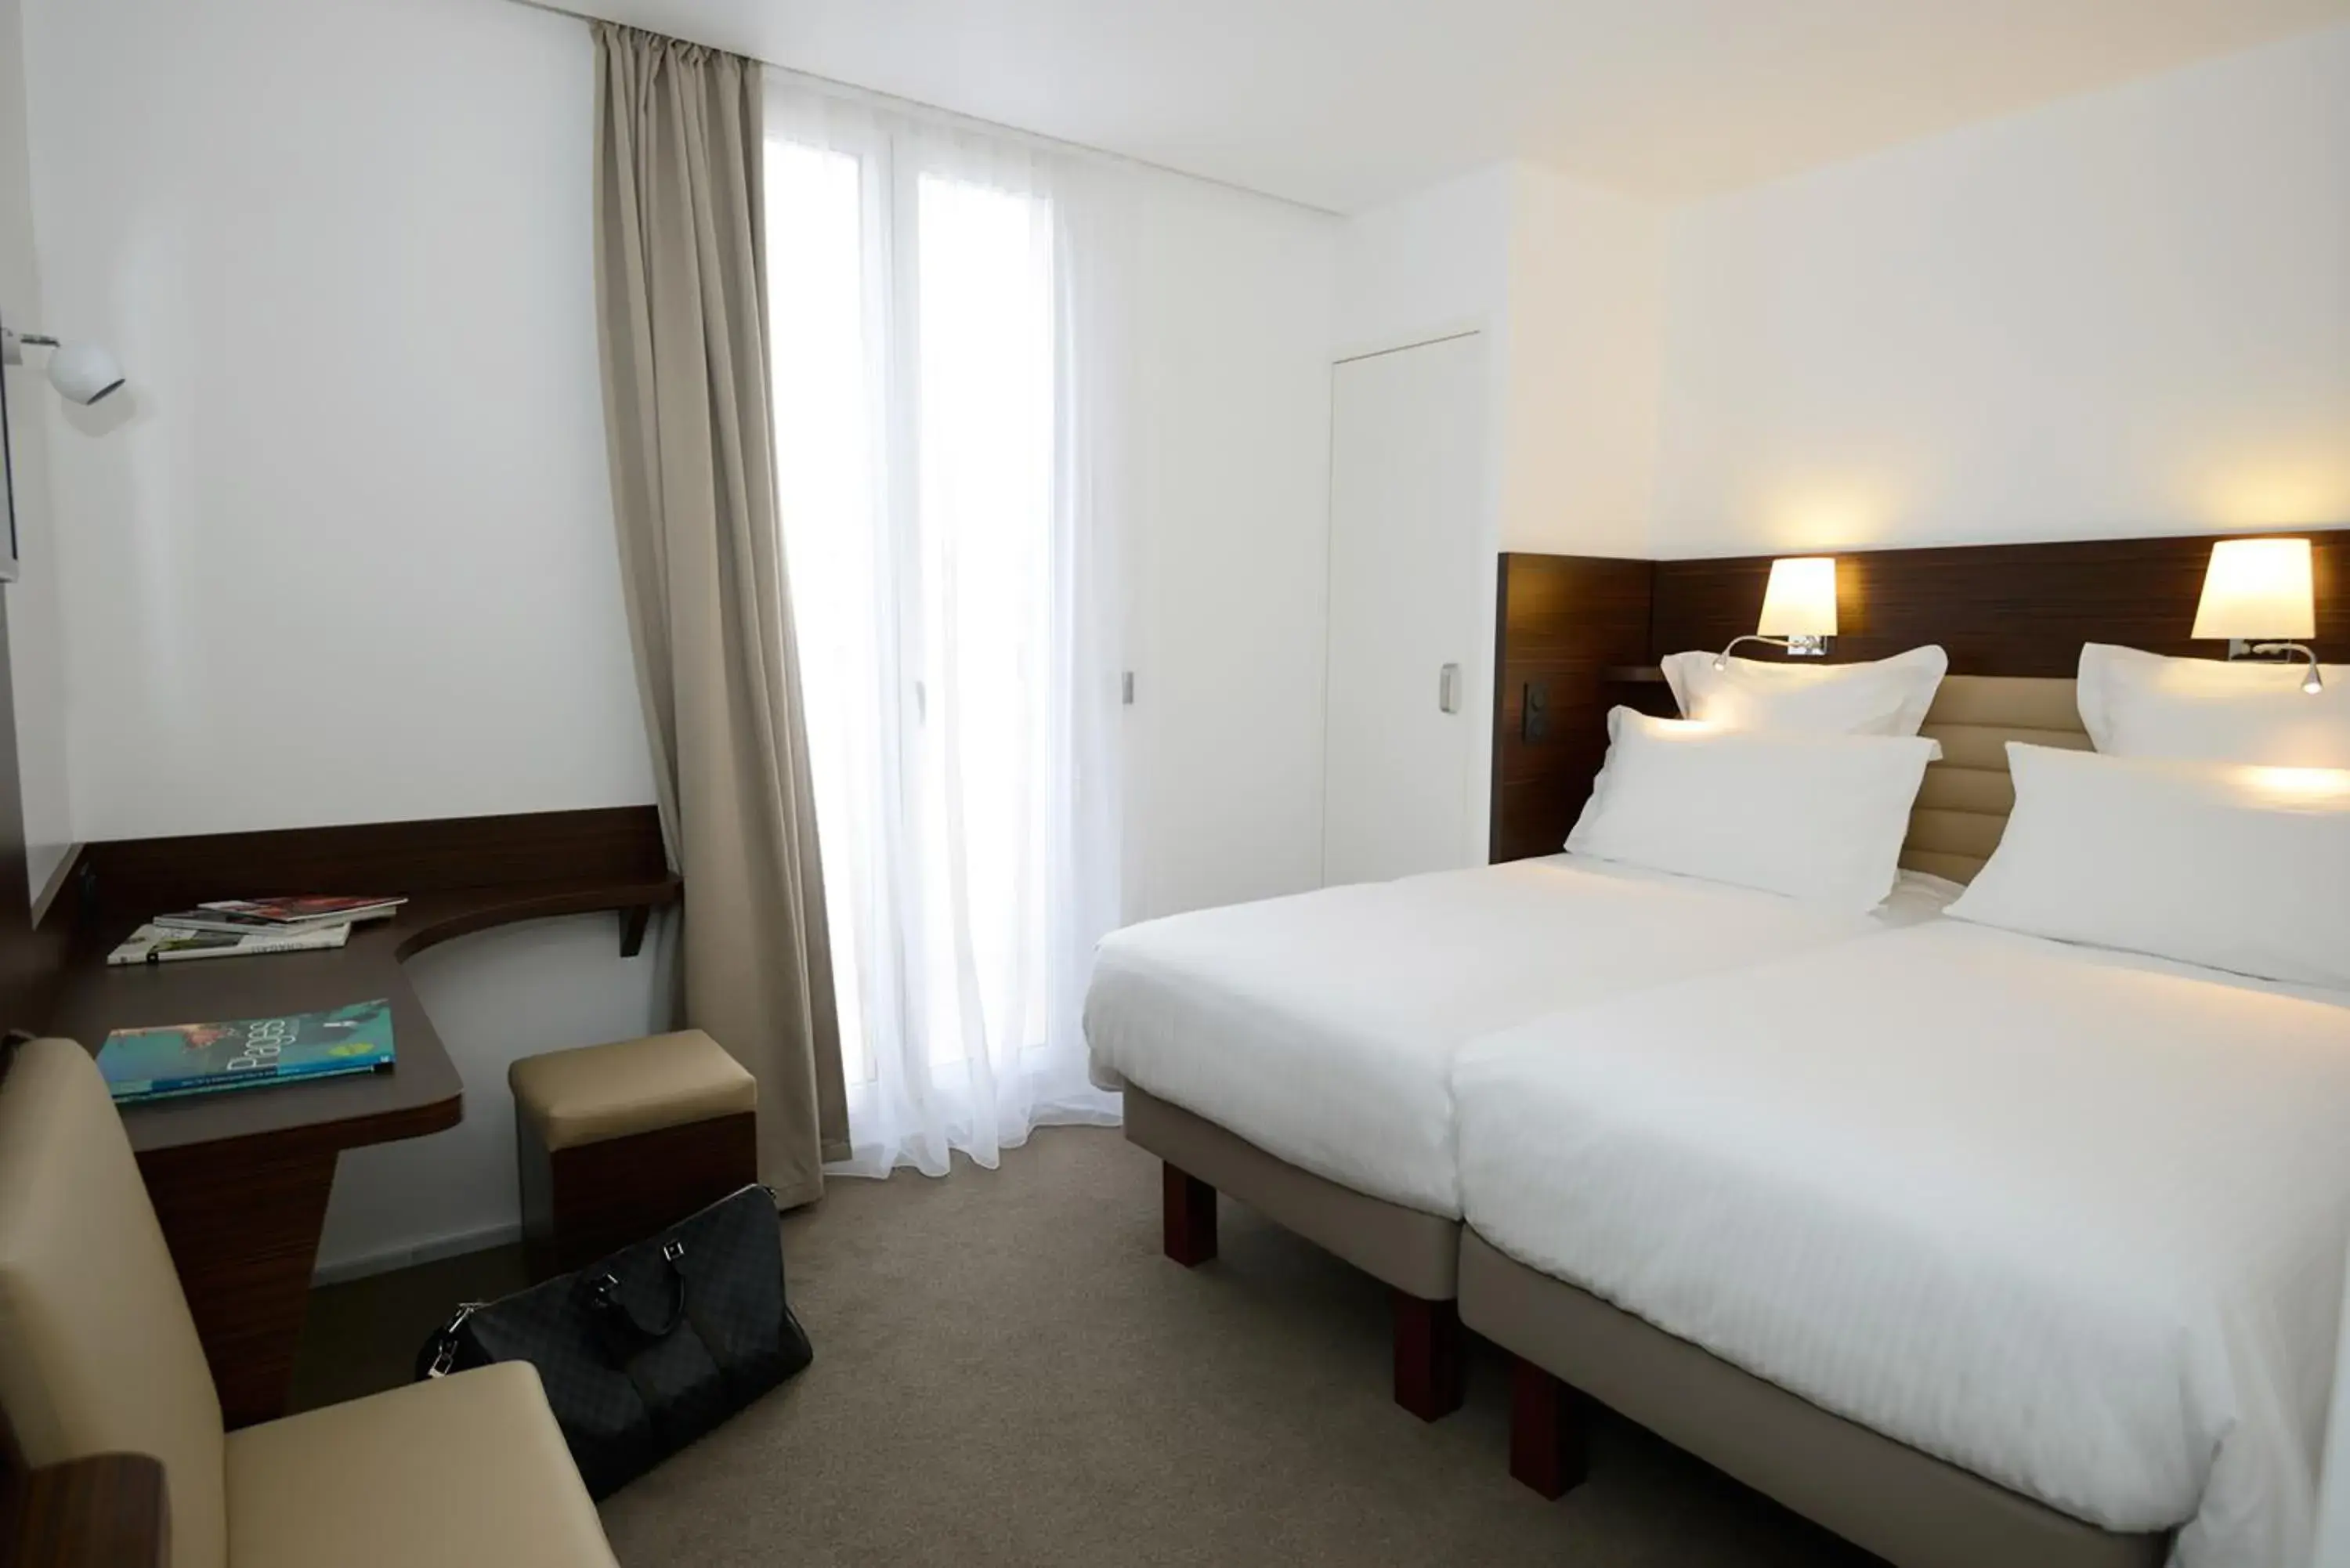 Bed, Room Photo in Hôtel Monsigny